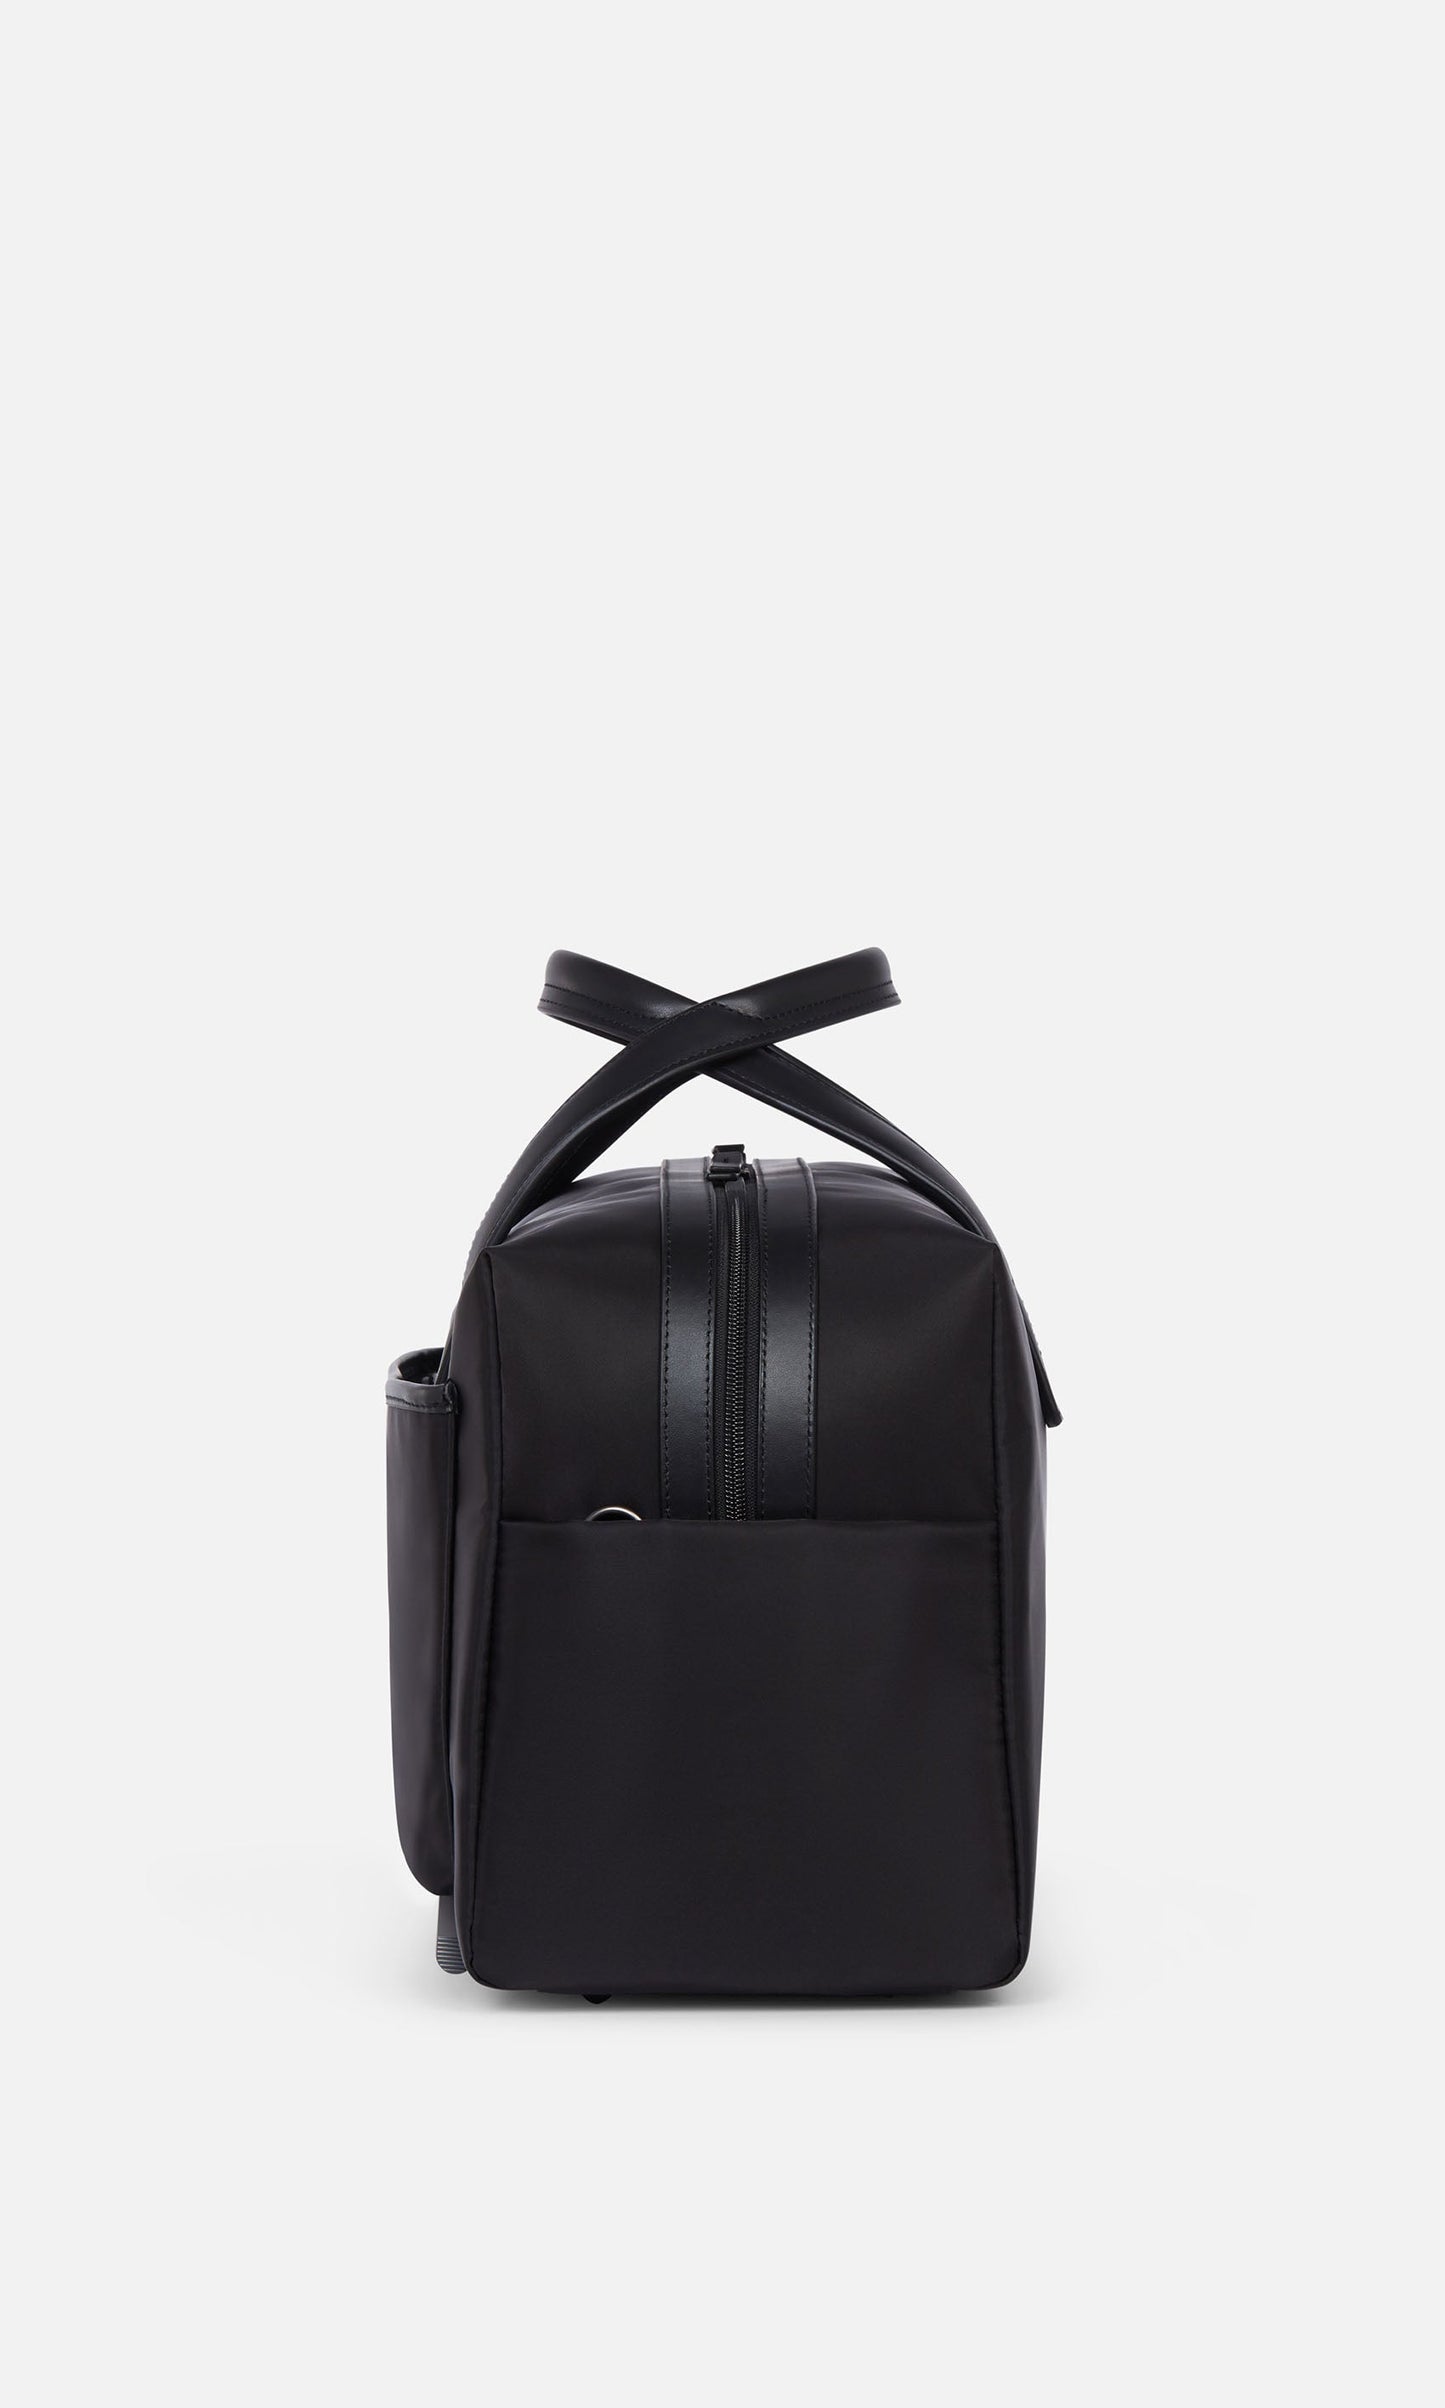 Antler Luggage -  Chelsea overnight bag in black - Overnight Bags Chelsea Overnight Bag Black | Lifestyle Bags | Antler UK